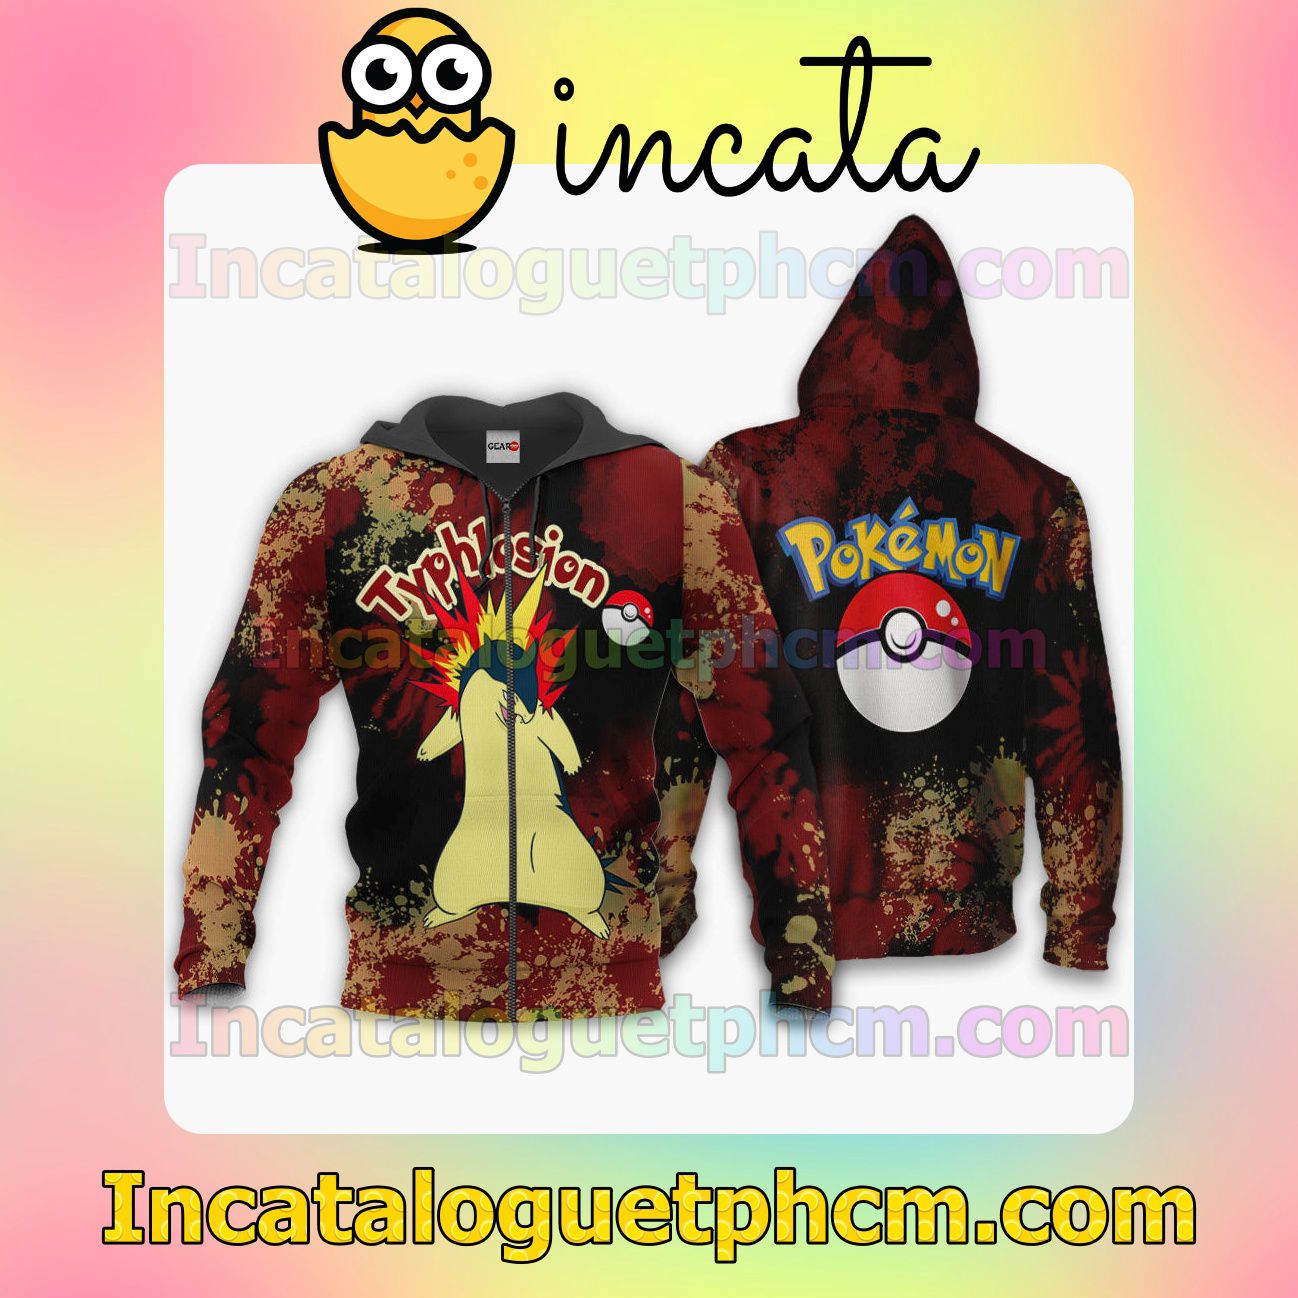 Typhlosion Pokemon Anime Tie Dye Style Clothing Merch Zip Hoodie Jacket Shirts